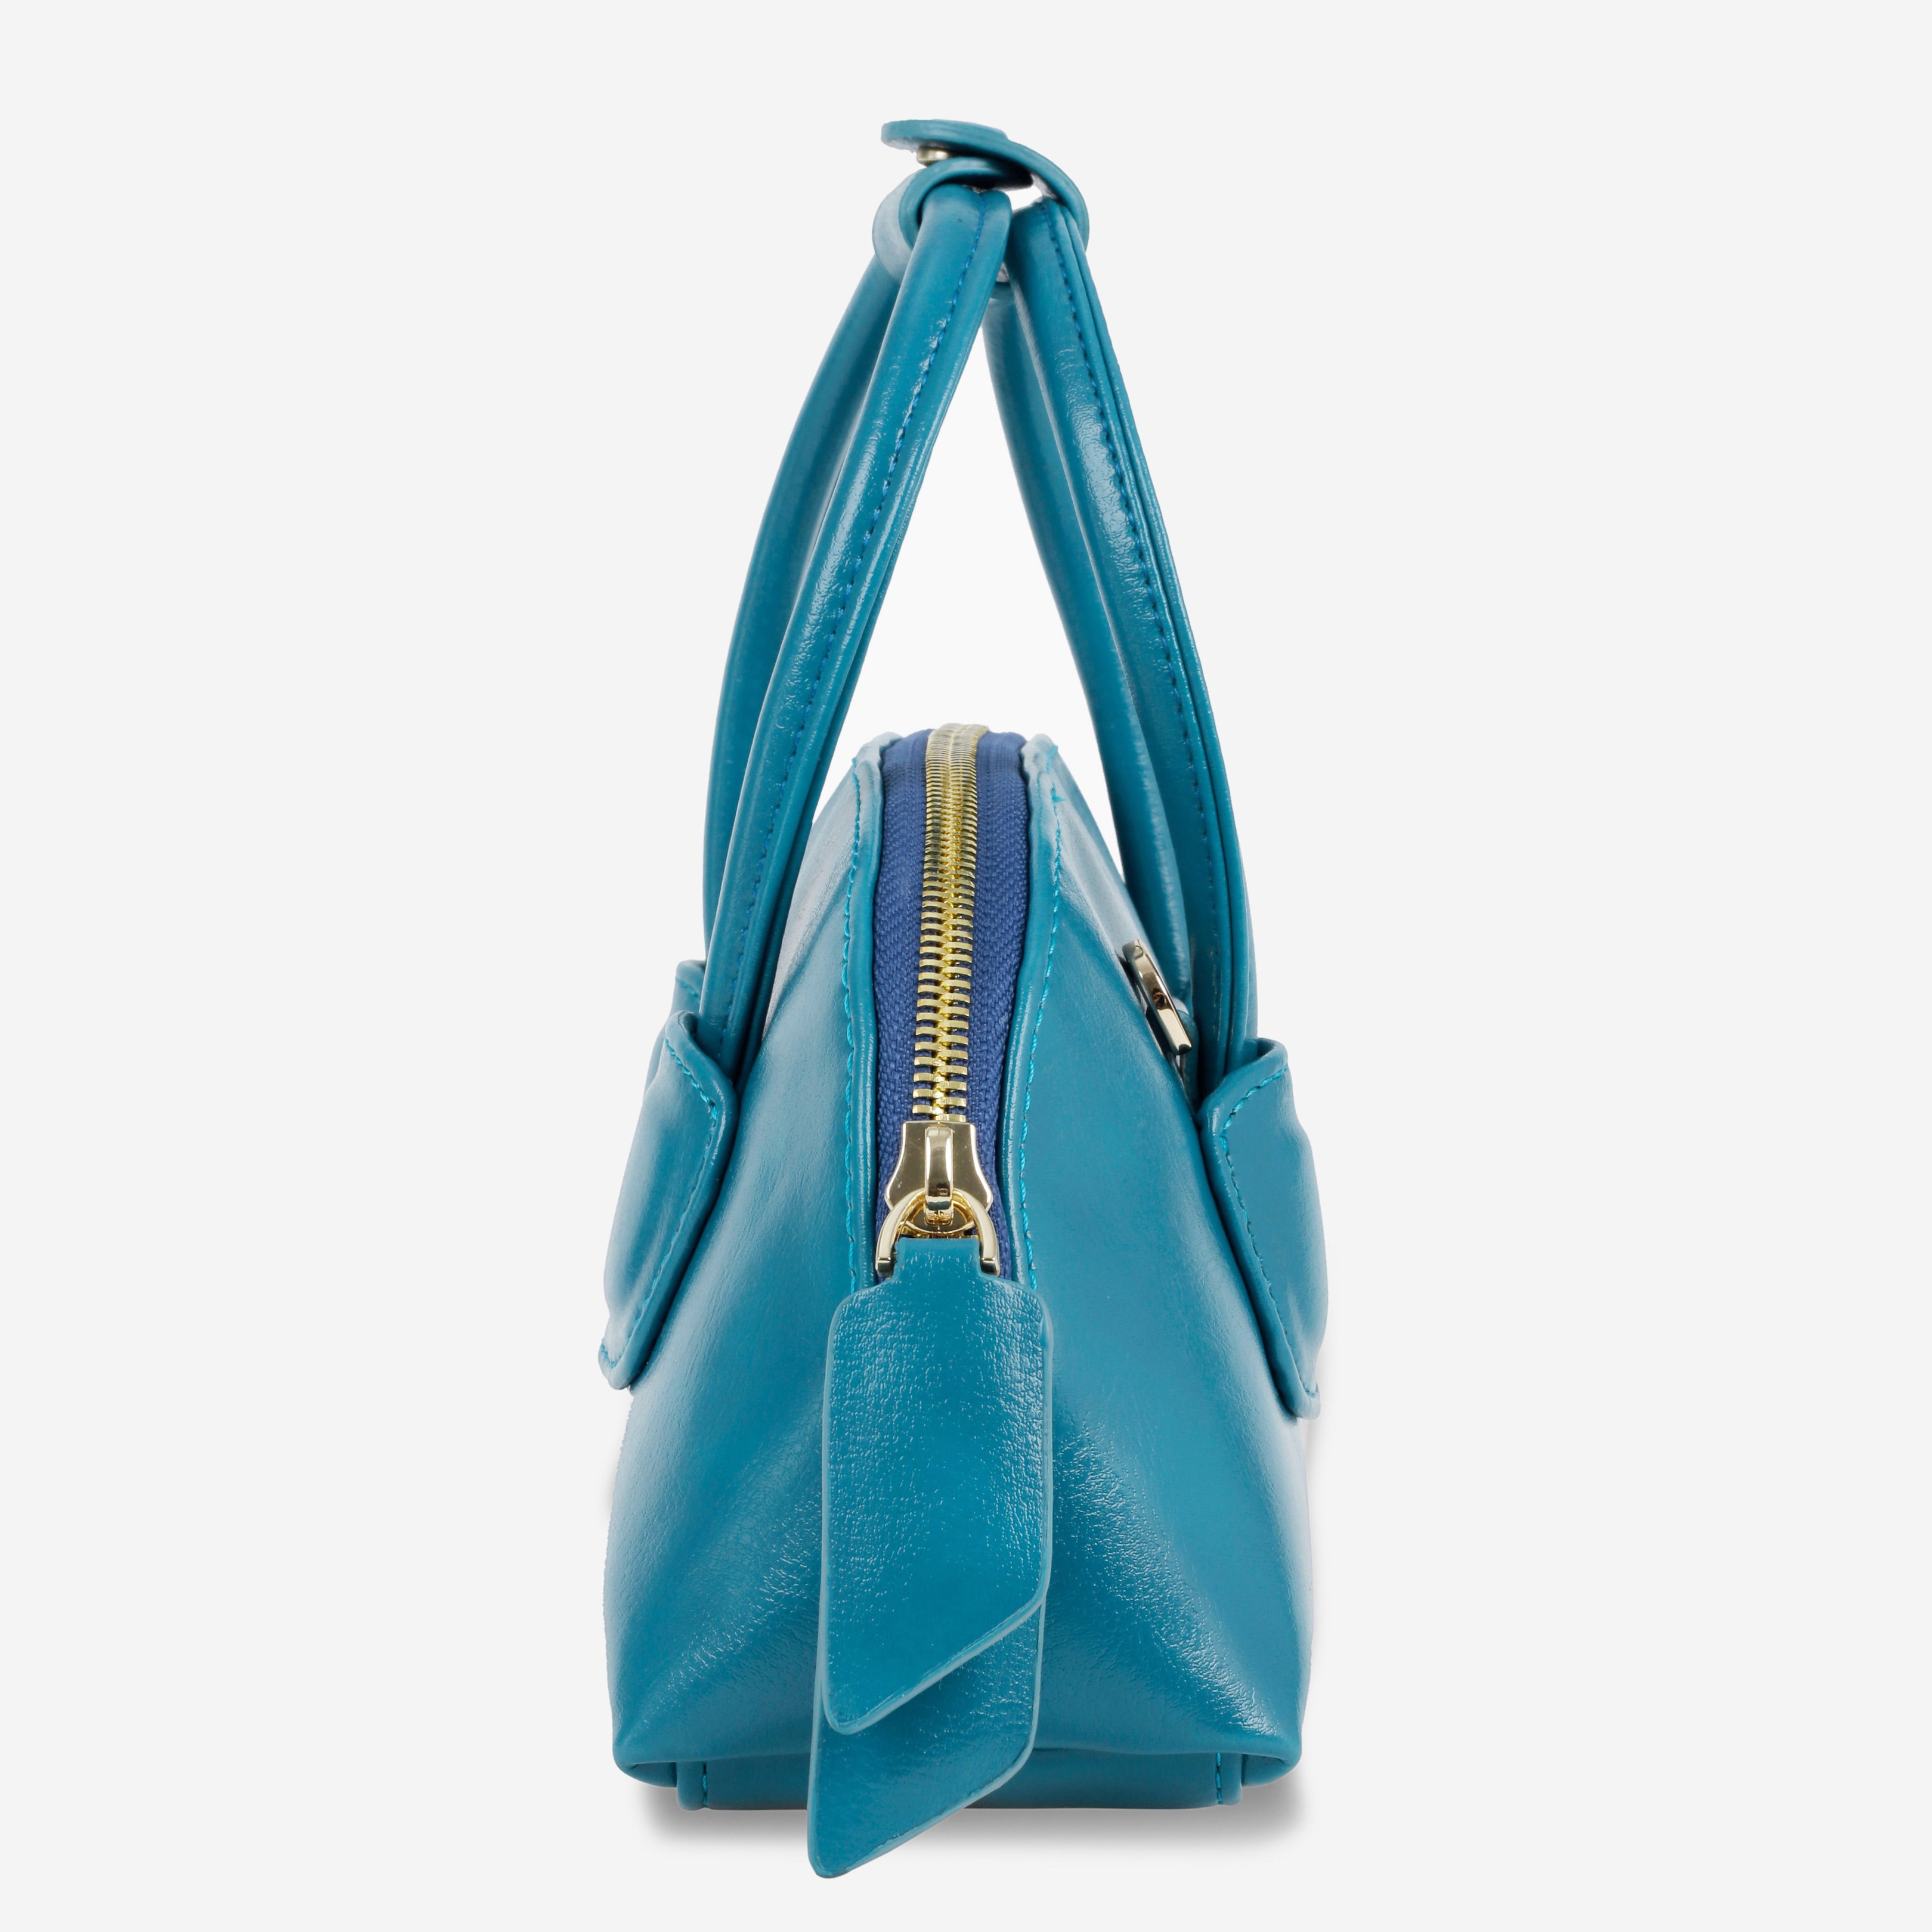 TACOS handbag blue small size (S)